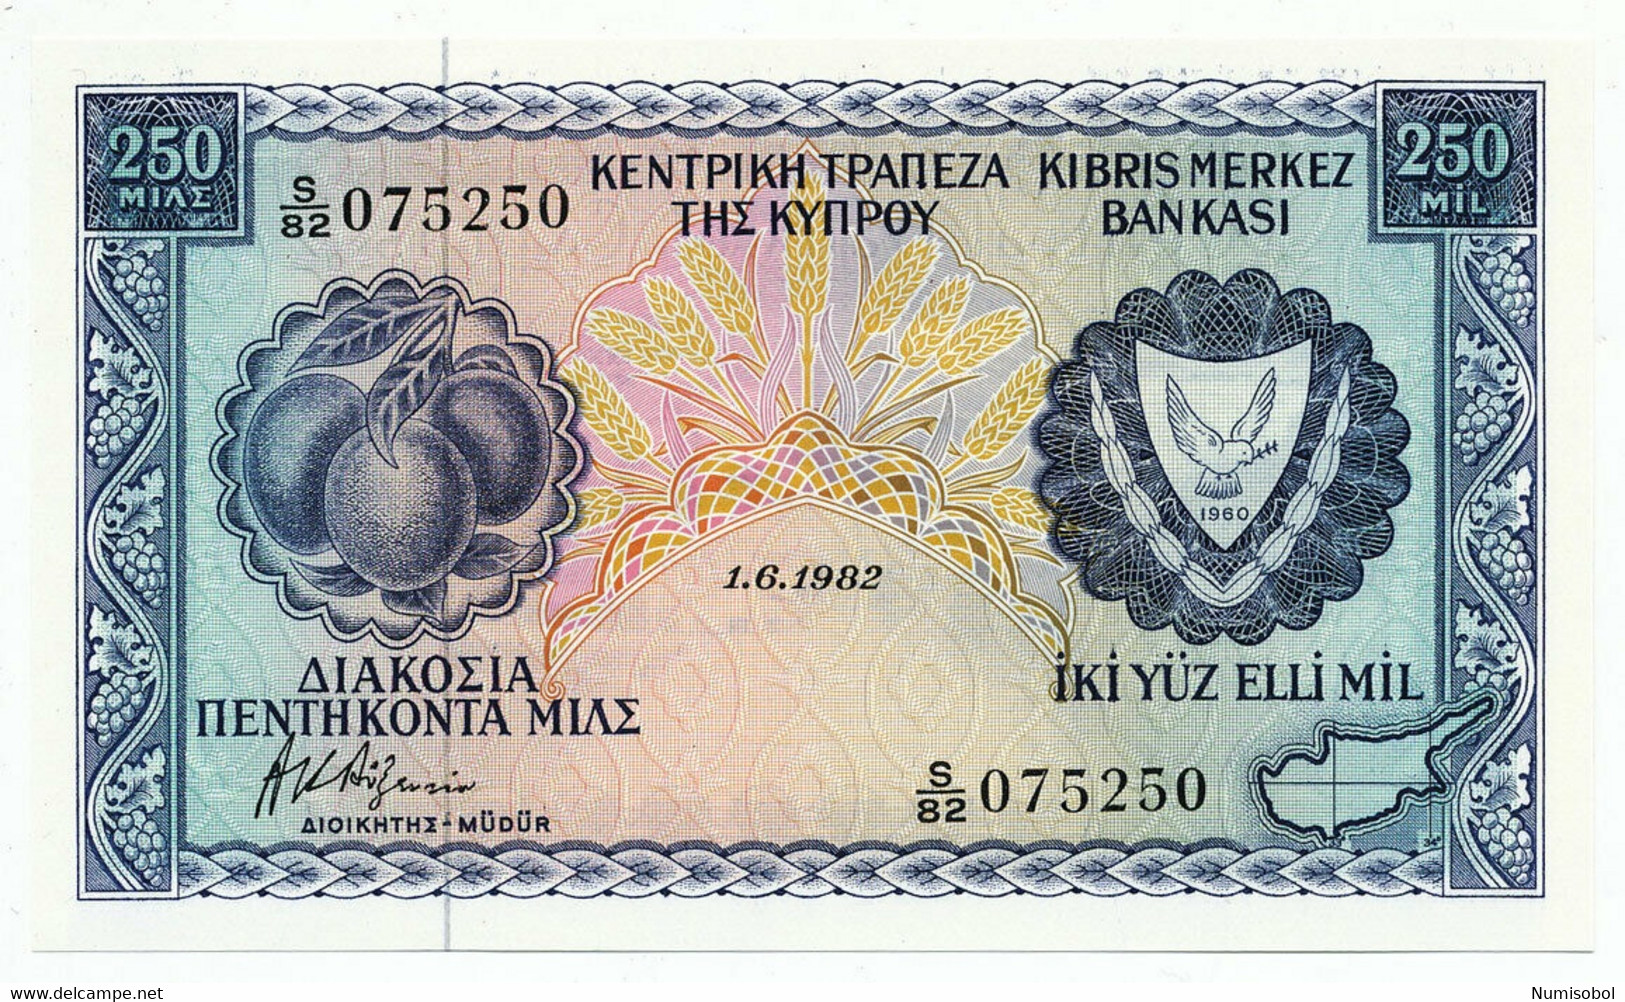 CYPRUS - 240 Mils 1. 6. 1982. P41c, UNC. (CY002) - Cyprus